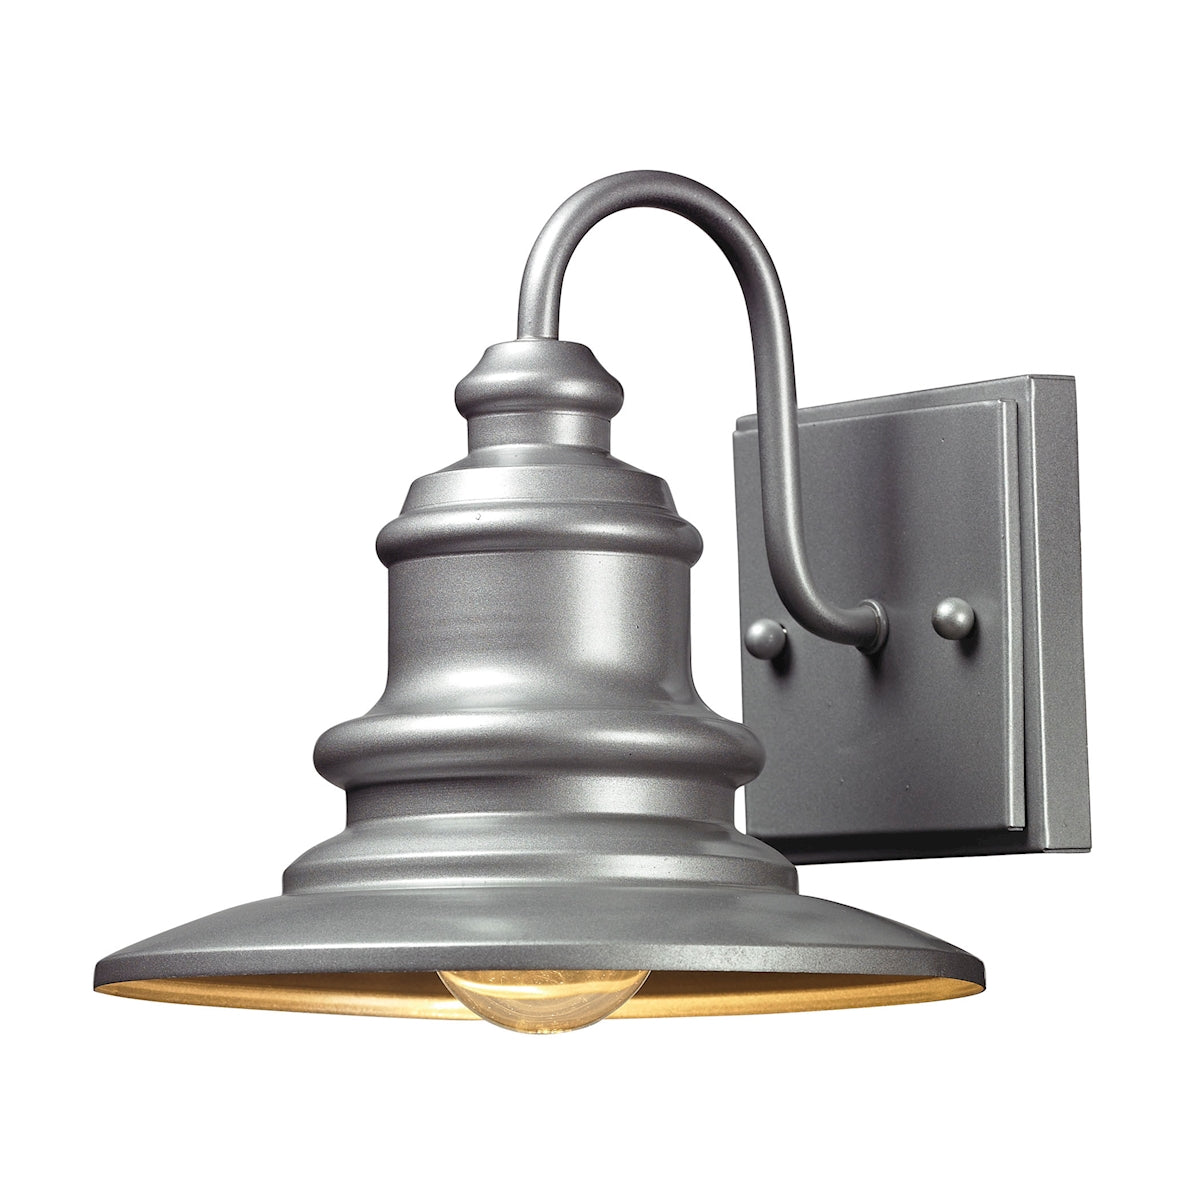 ELK Lighting 47020/1 Marina 1-Light Outdoor Wall Lamp in Matte Silver